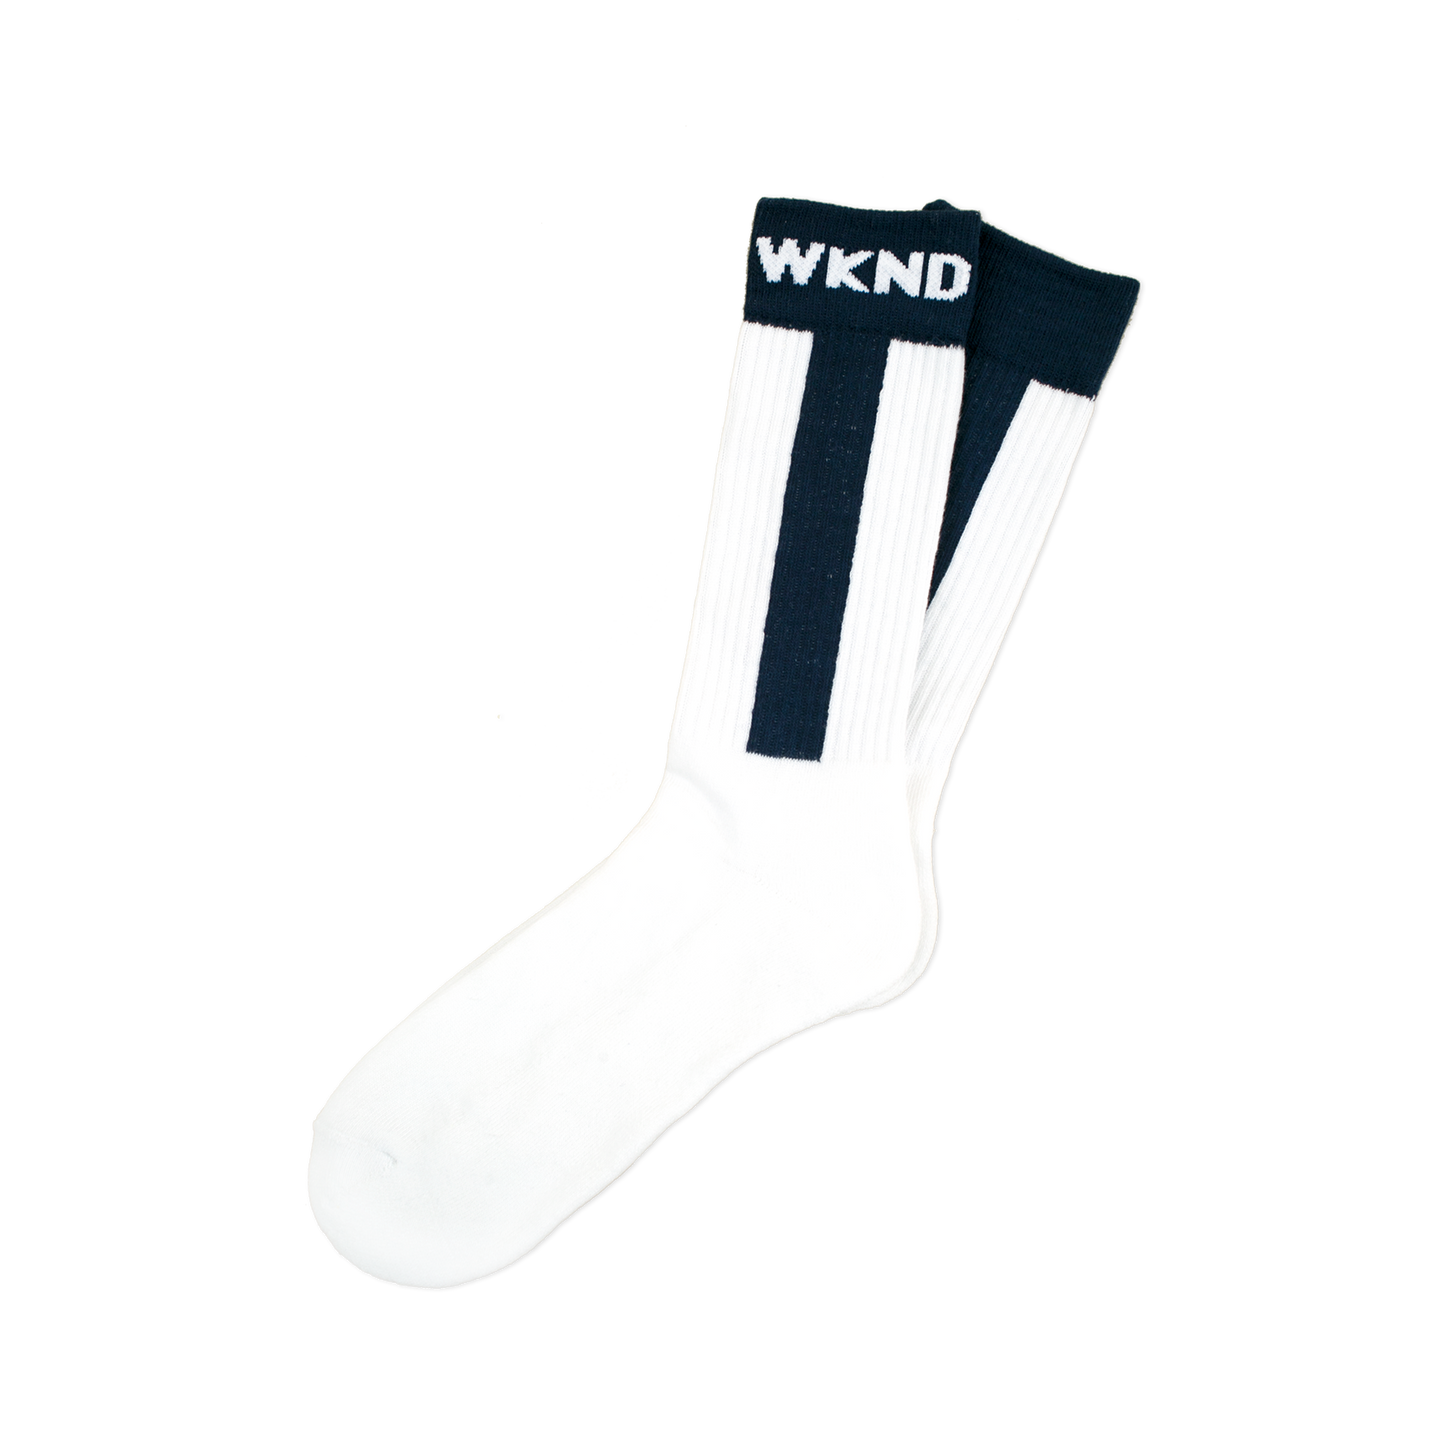 WKND ベースボール ソックス - ネイビー/ホワイト